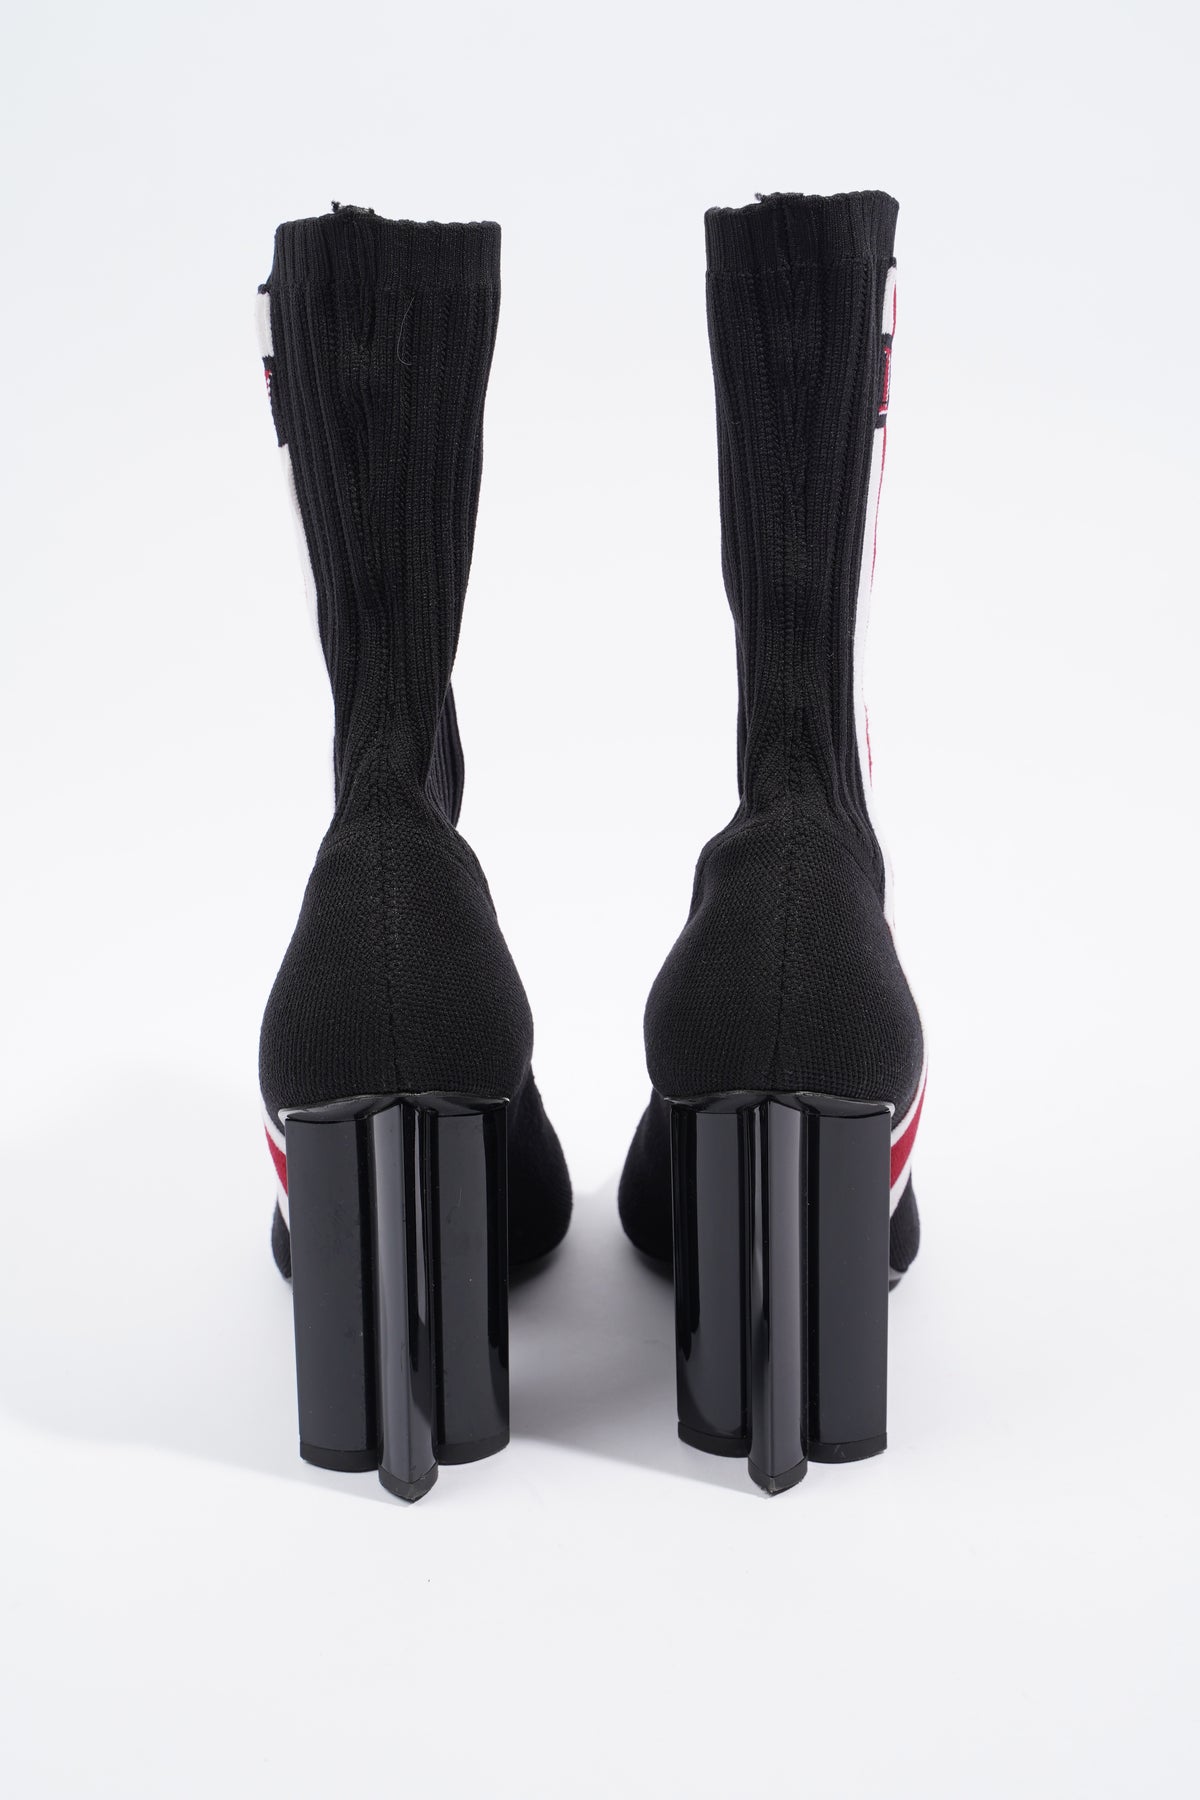 LOUIS VUITTON Silhouette Ankle Boot Black. Size 38